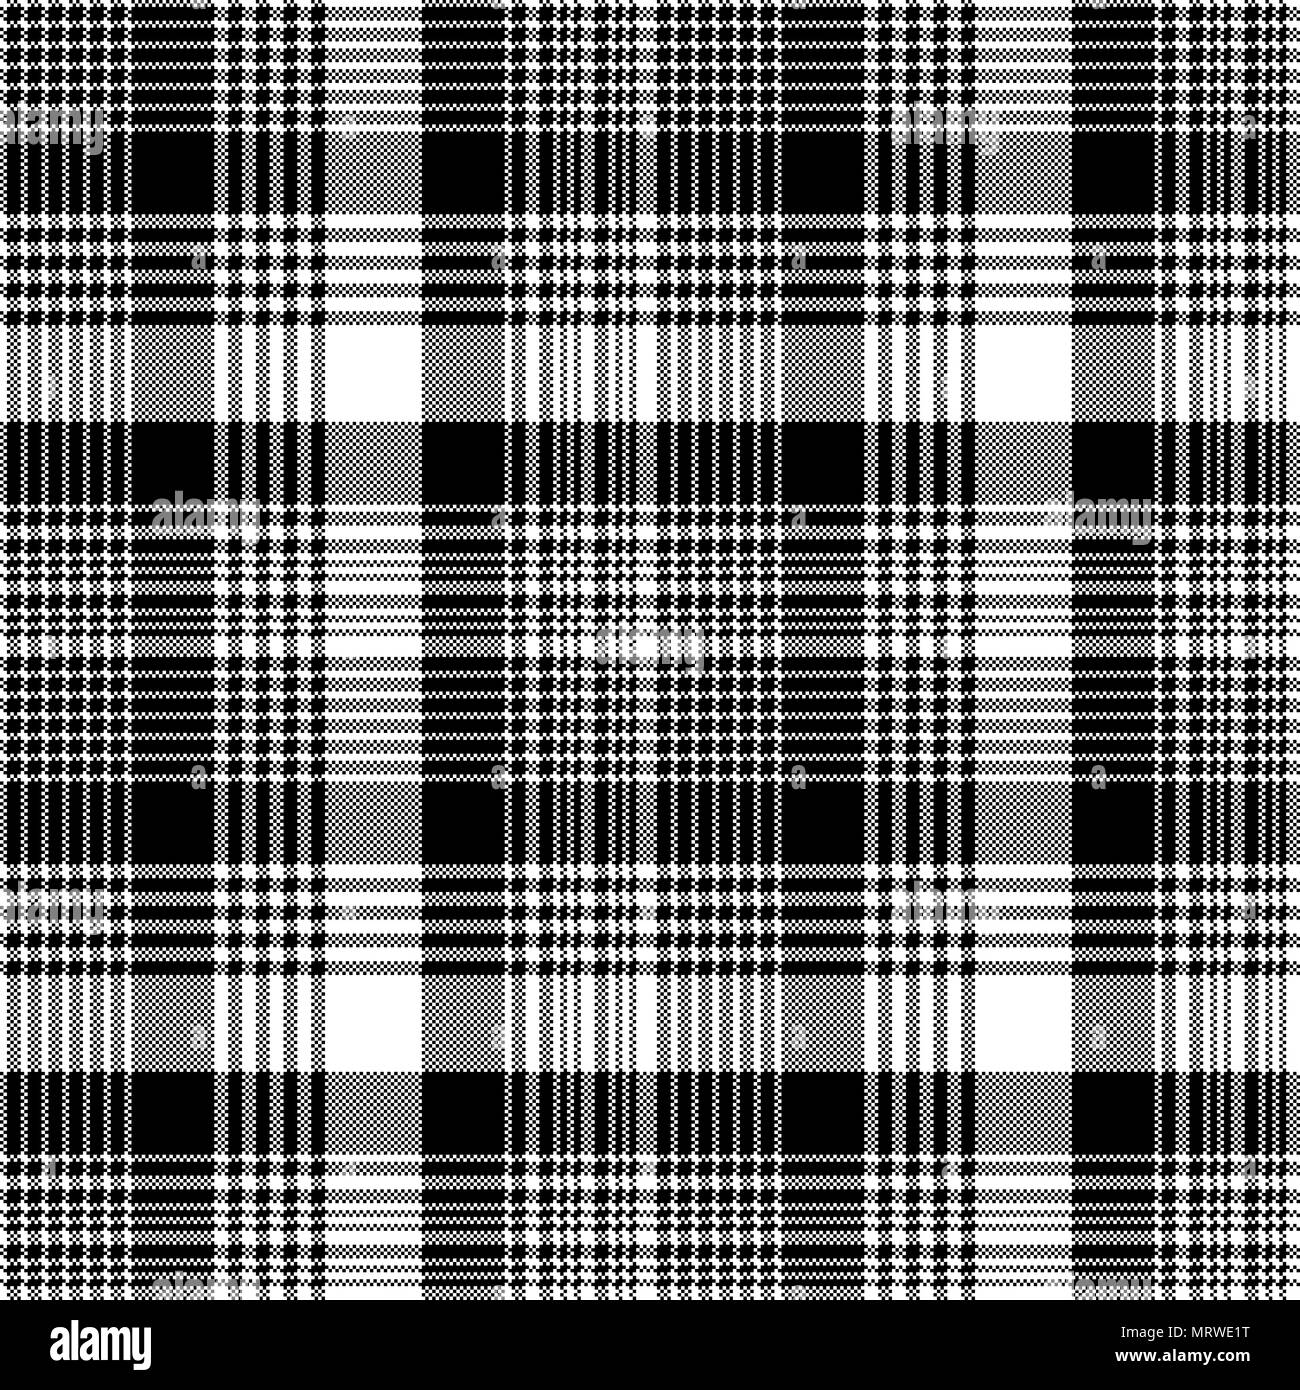 https://c8.alamy.com/comp/MRWE1T/tartan-plaid-black-white-fabric-texture-seamless-pattern-vector-illustration-MRWE1T.jpg